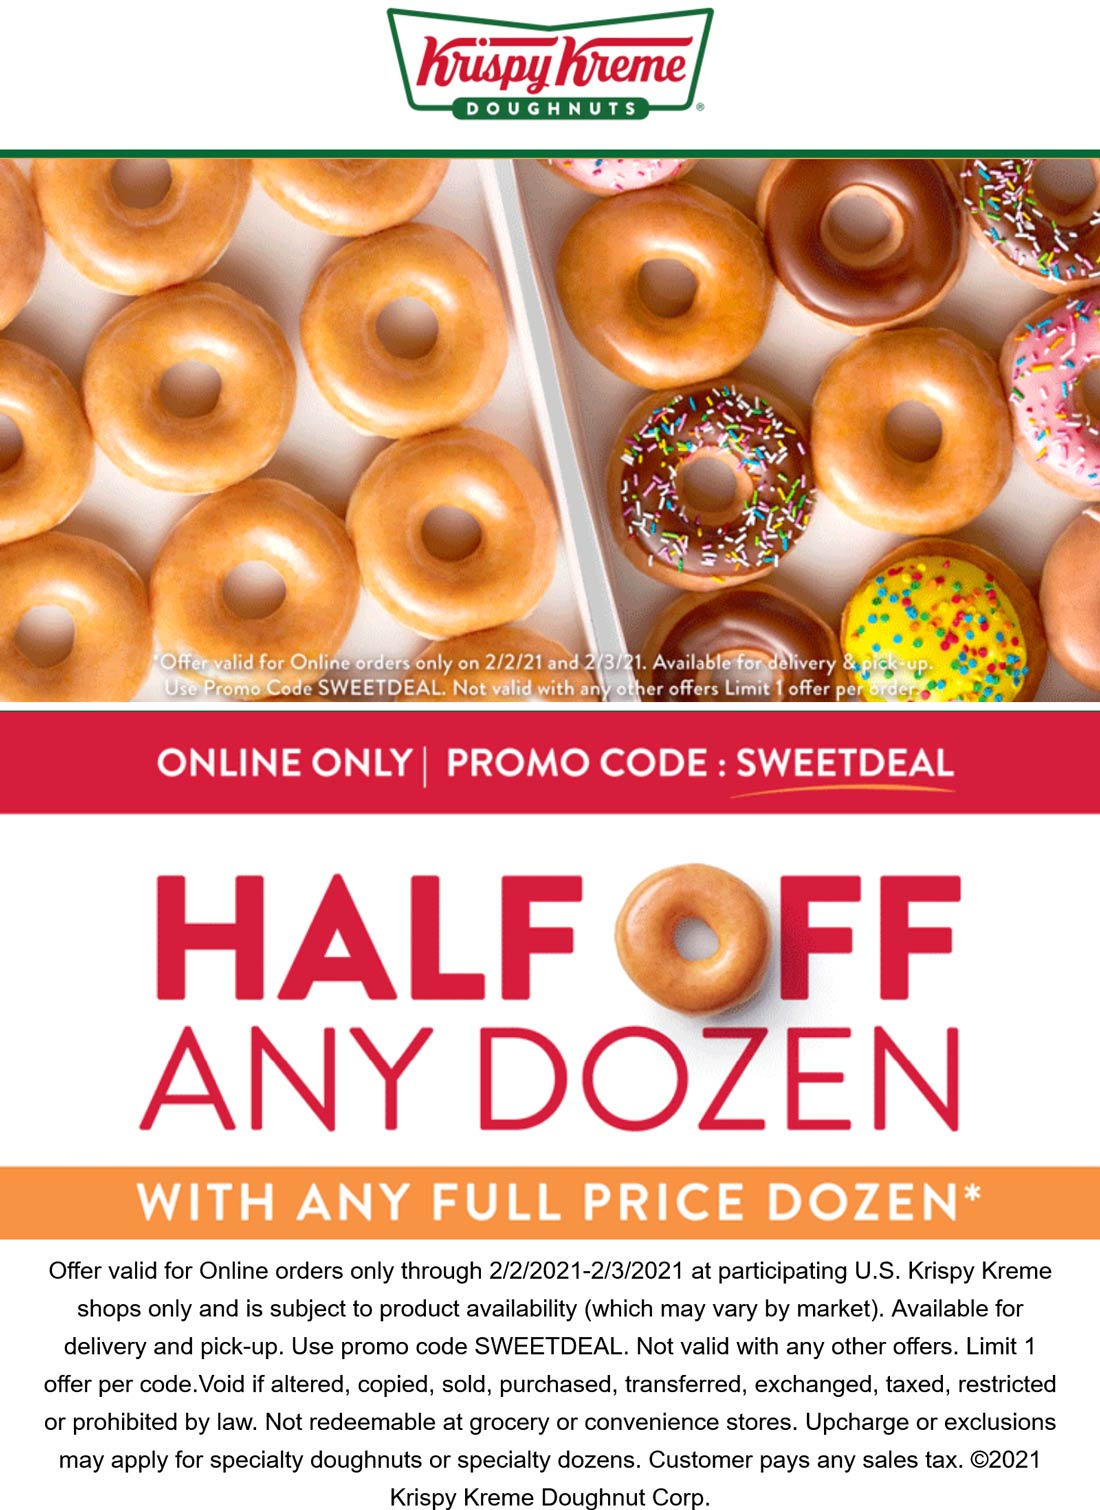 Krispy Kreme restaurants Coupon  Second dozen 50% off at Krispy Kreme doughnuts via promo code SWEETDEAL #krispykreme 